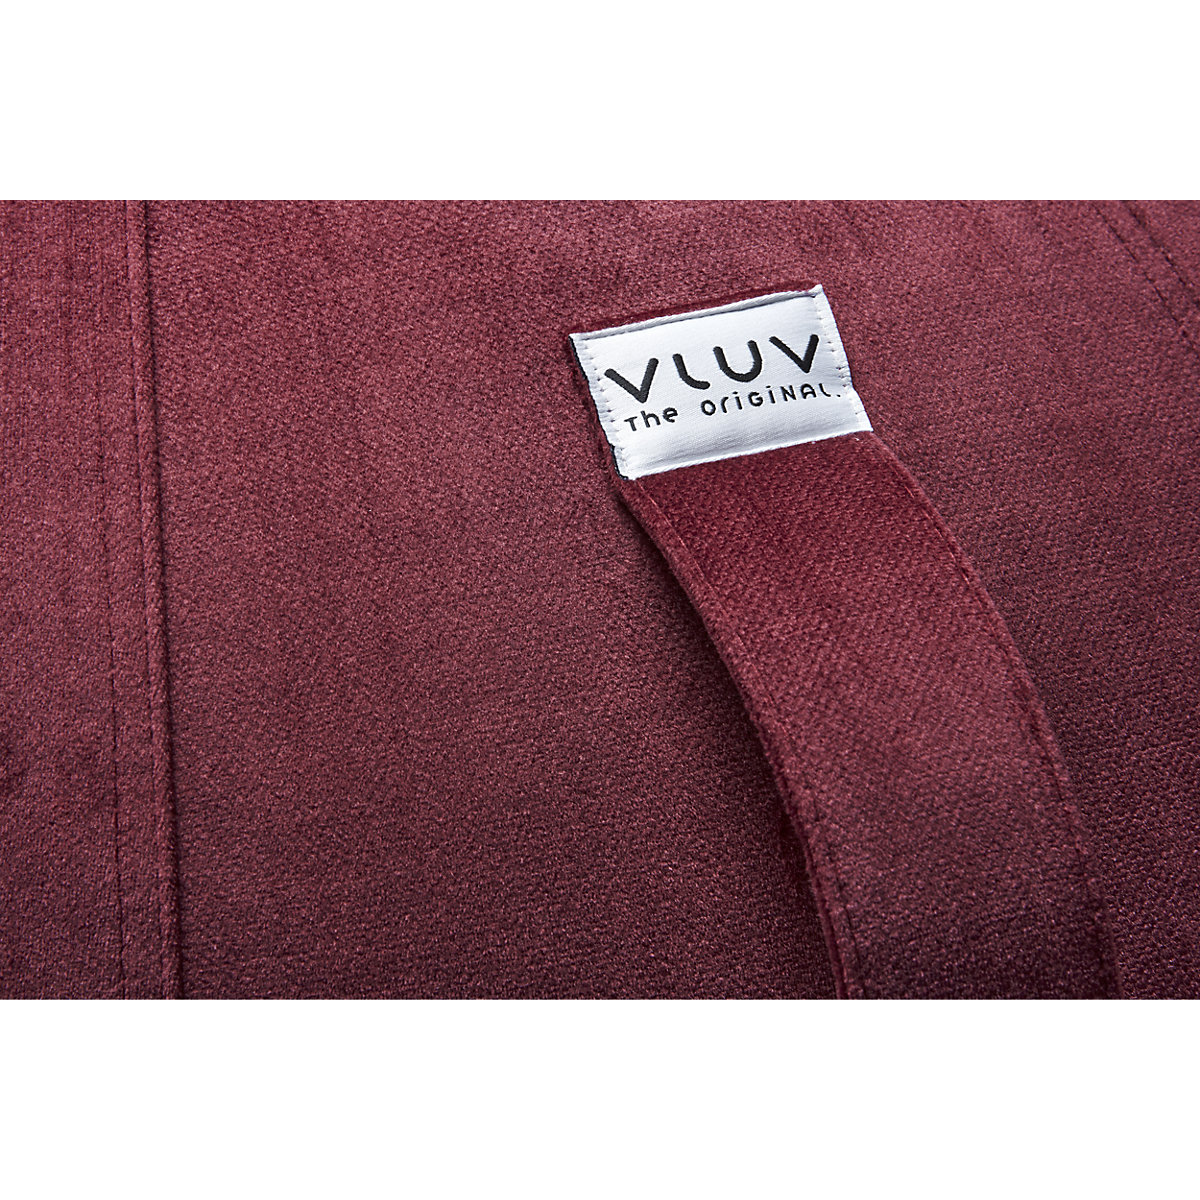 Piłka do siedzenia VARM – VLUV (Zdjęcie produktu 2)-1